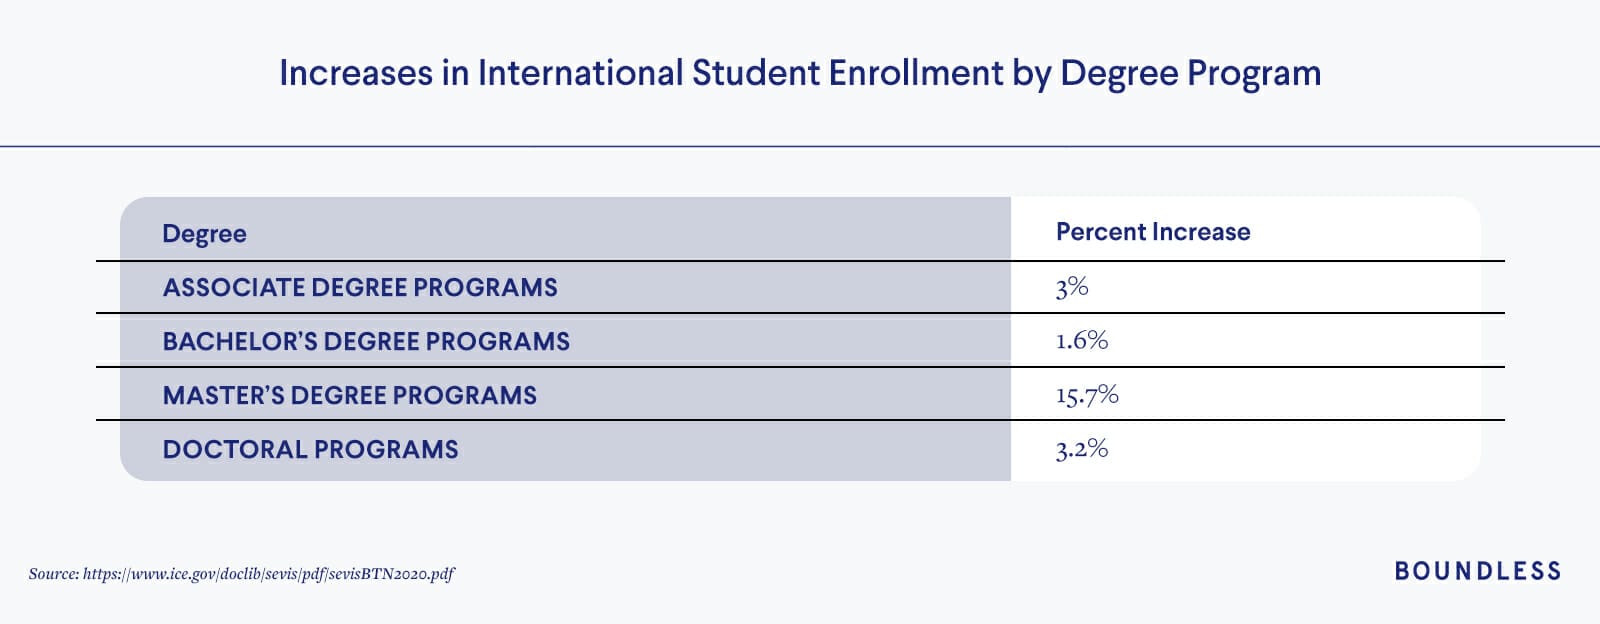 Increases in International Student Enrollment by Degree Program